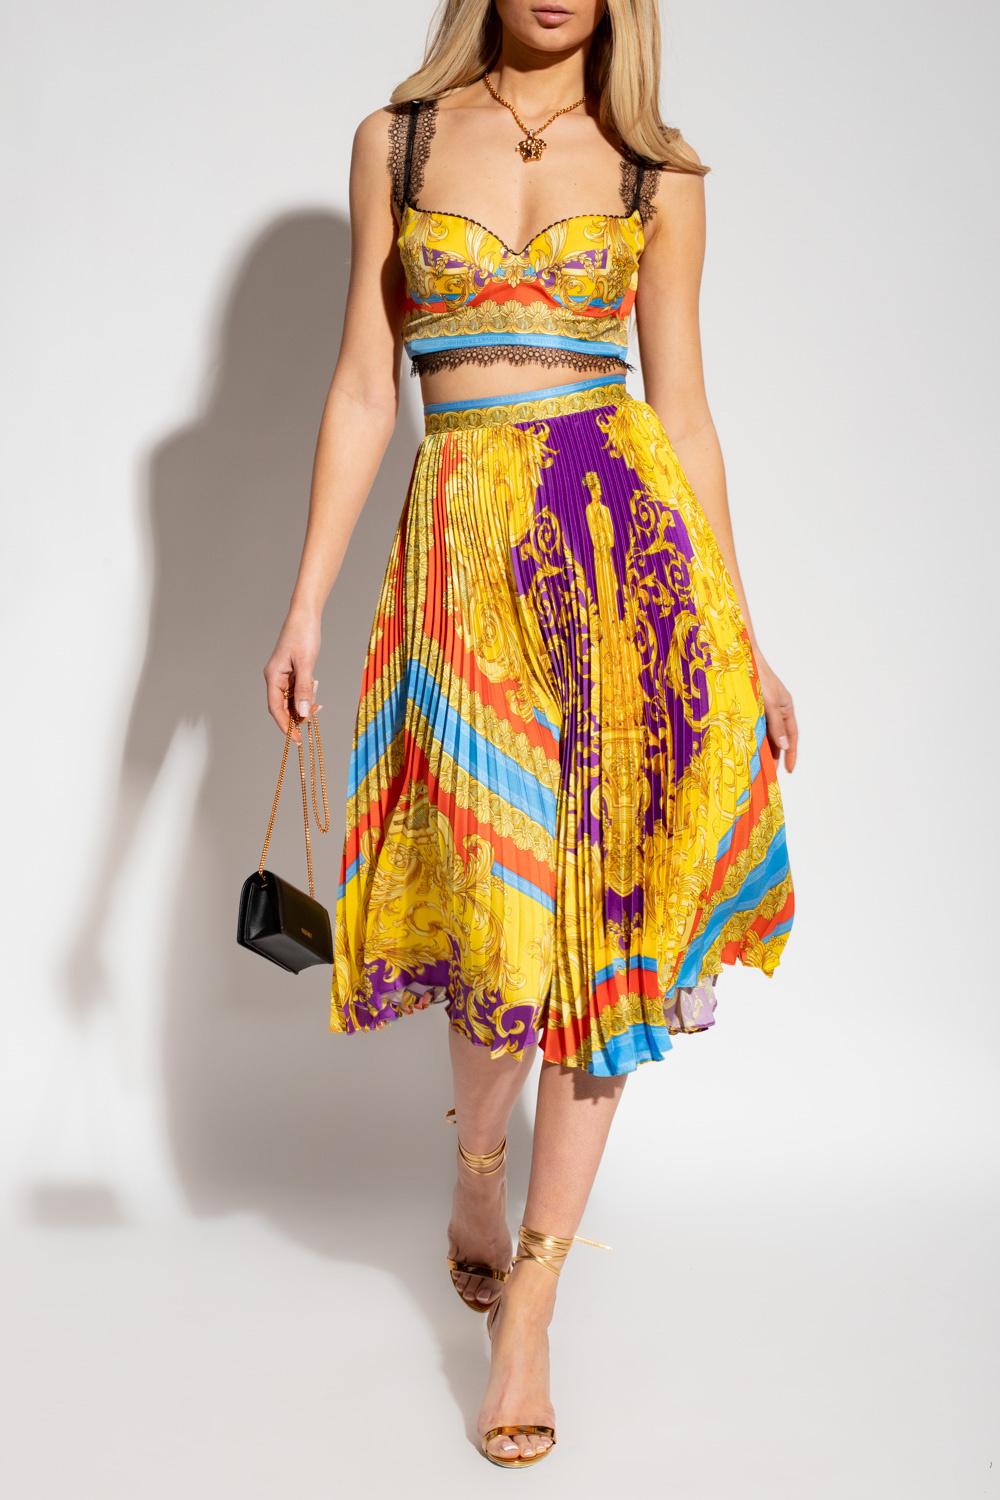 Versace Versus 100% Wool Multi-Color Checkered Women's Pleated Skirt Sz XS S M 